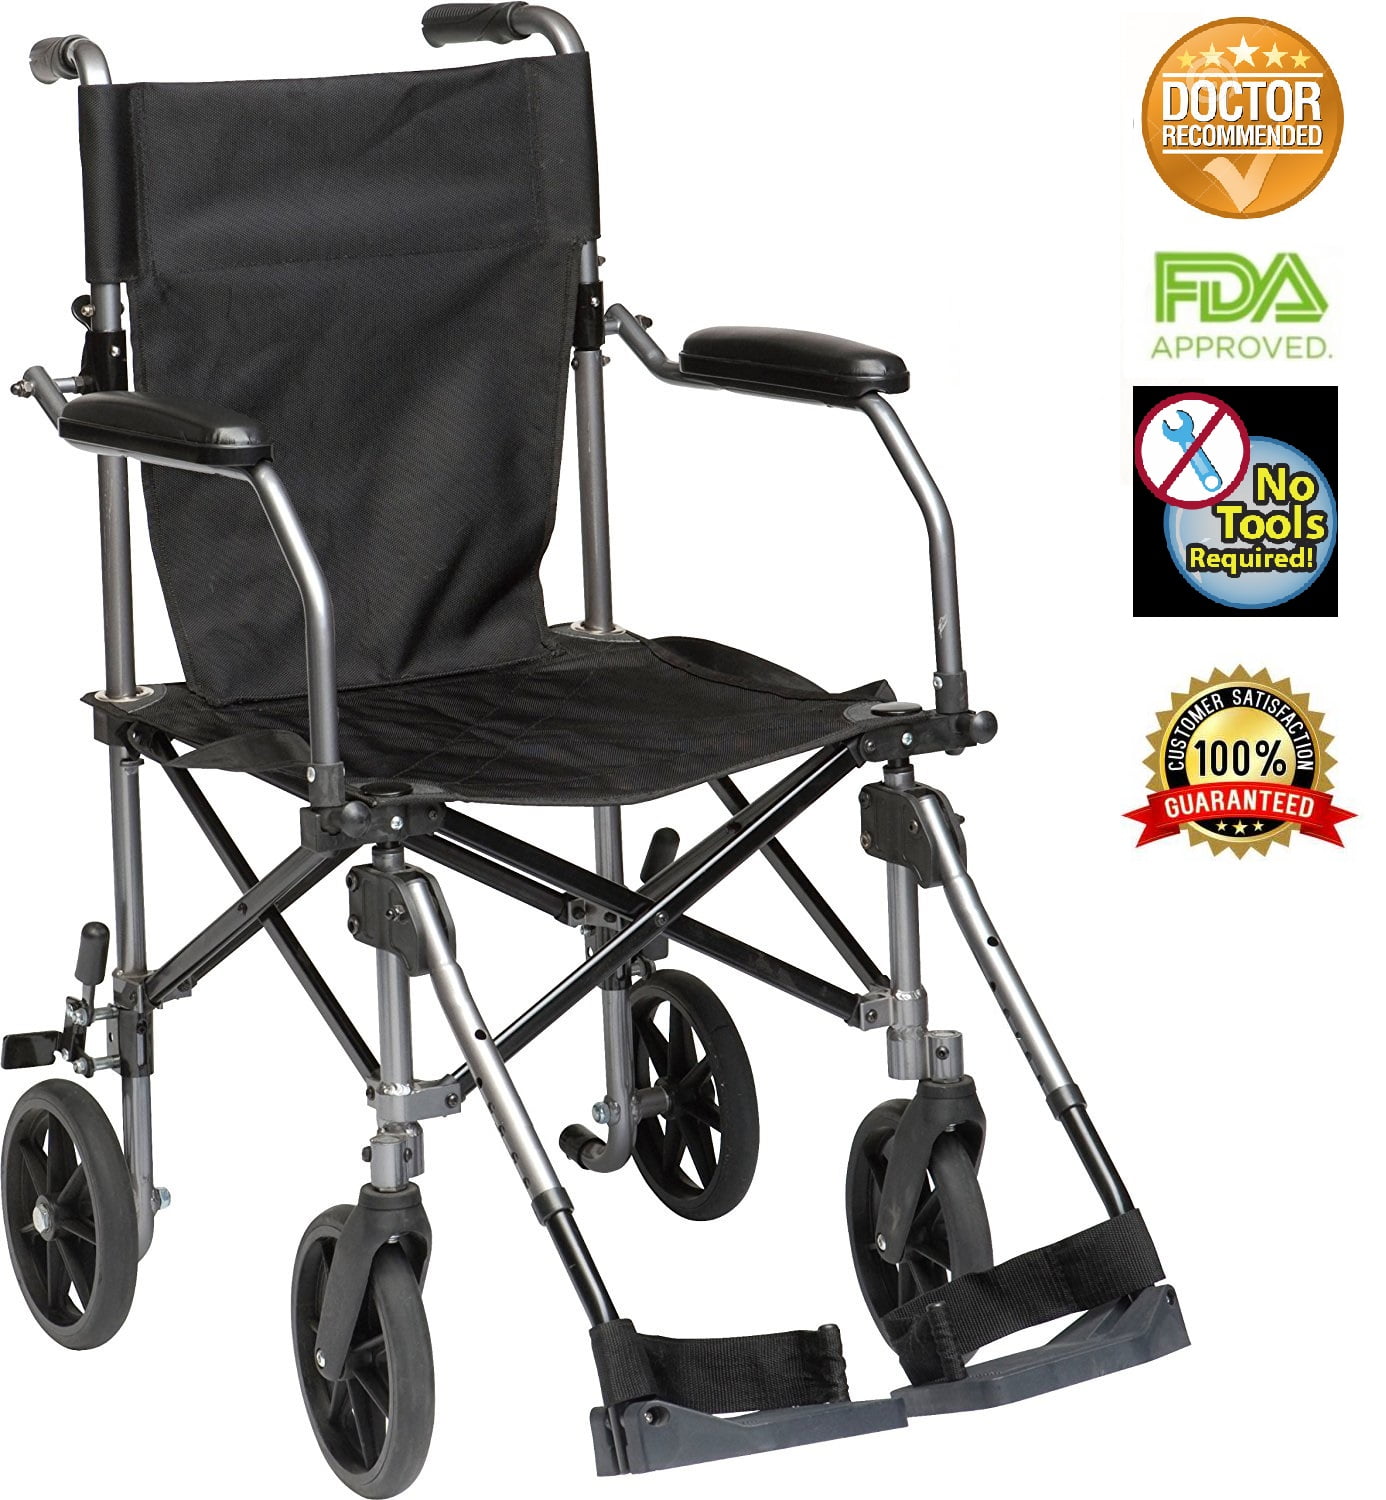 Healthline Super Light Weight Transport Wheelchair Lightweight Folding Transport Wheelchair With Brakes Elevating Leg Rest And Carry Travel Bag Lightweight Wheelchair Under 25 Lbs 19 17 Inch Seat Walmart Com Walmart Com